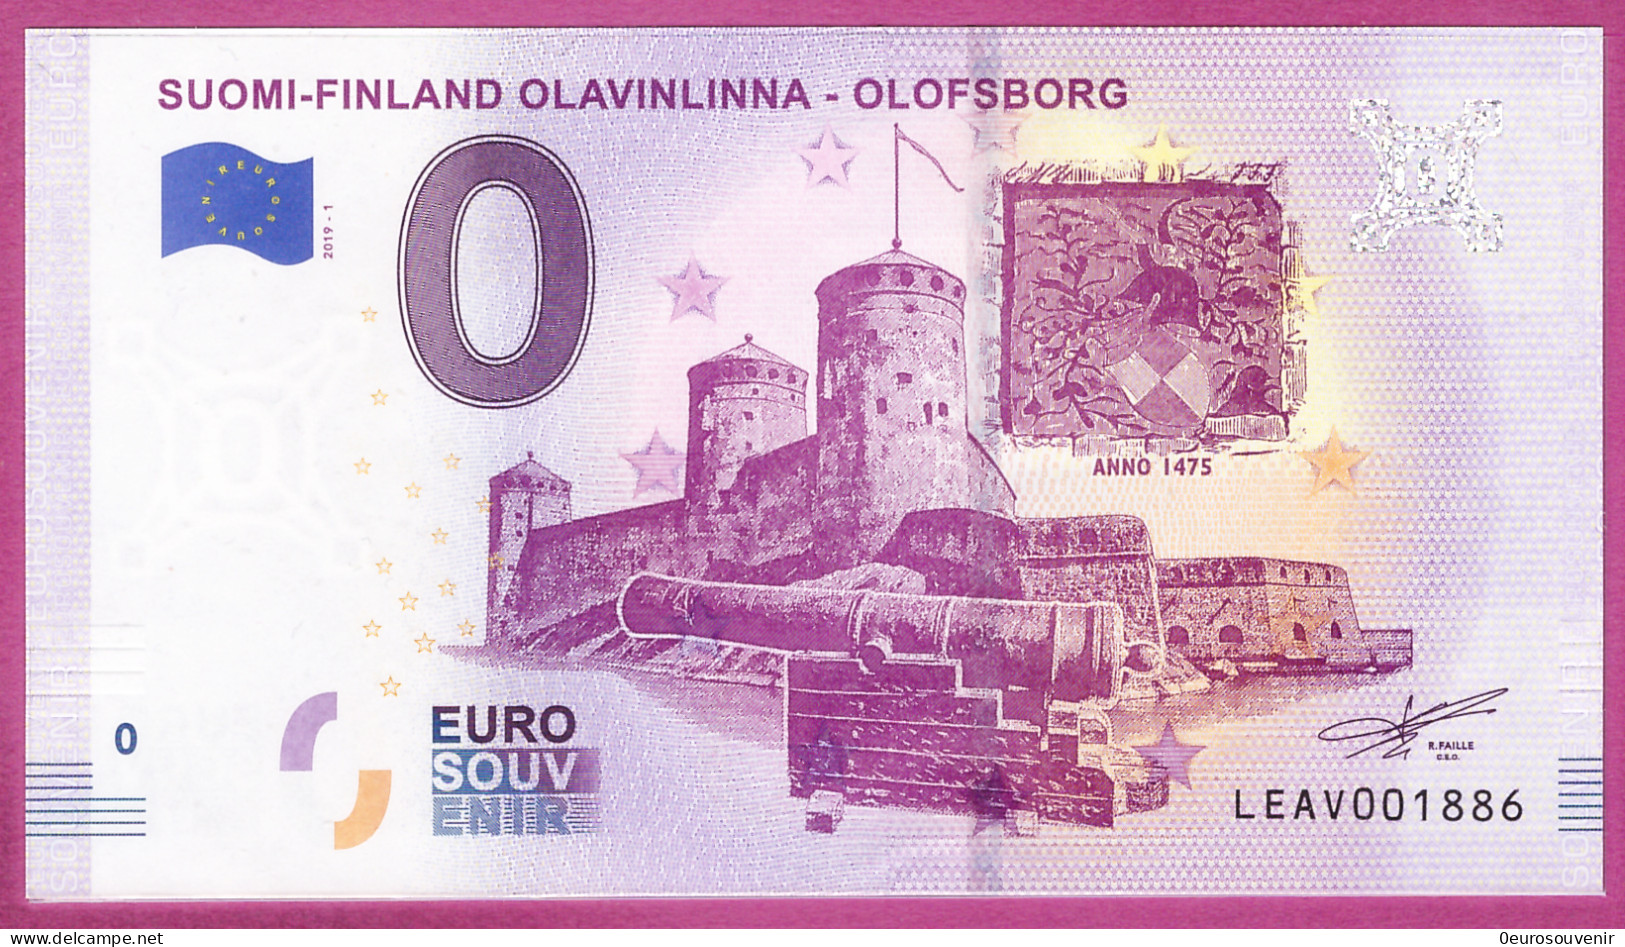 0-Euro LEAV 2019-1 SUOMI-FINLAND OLAVINLINNA - OLOFSBORG - Pruebas Privadas